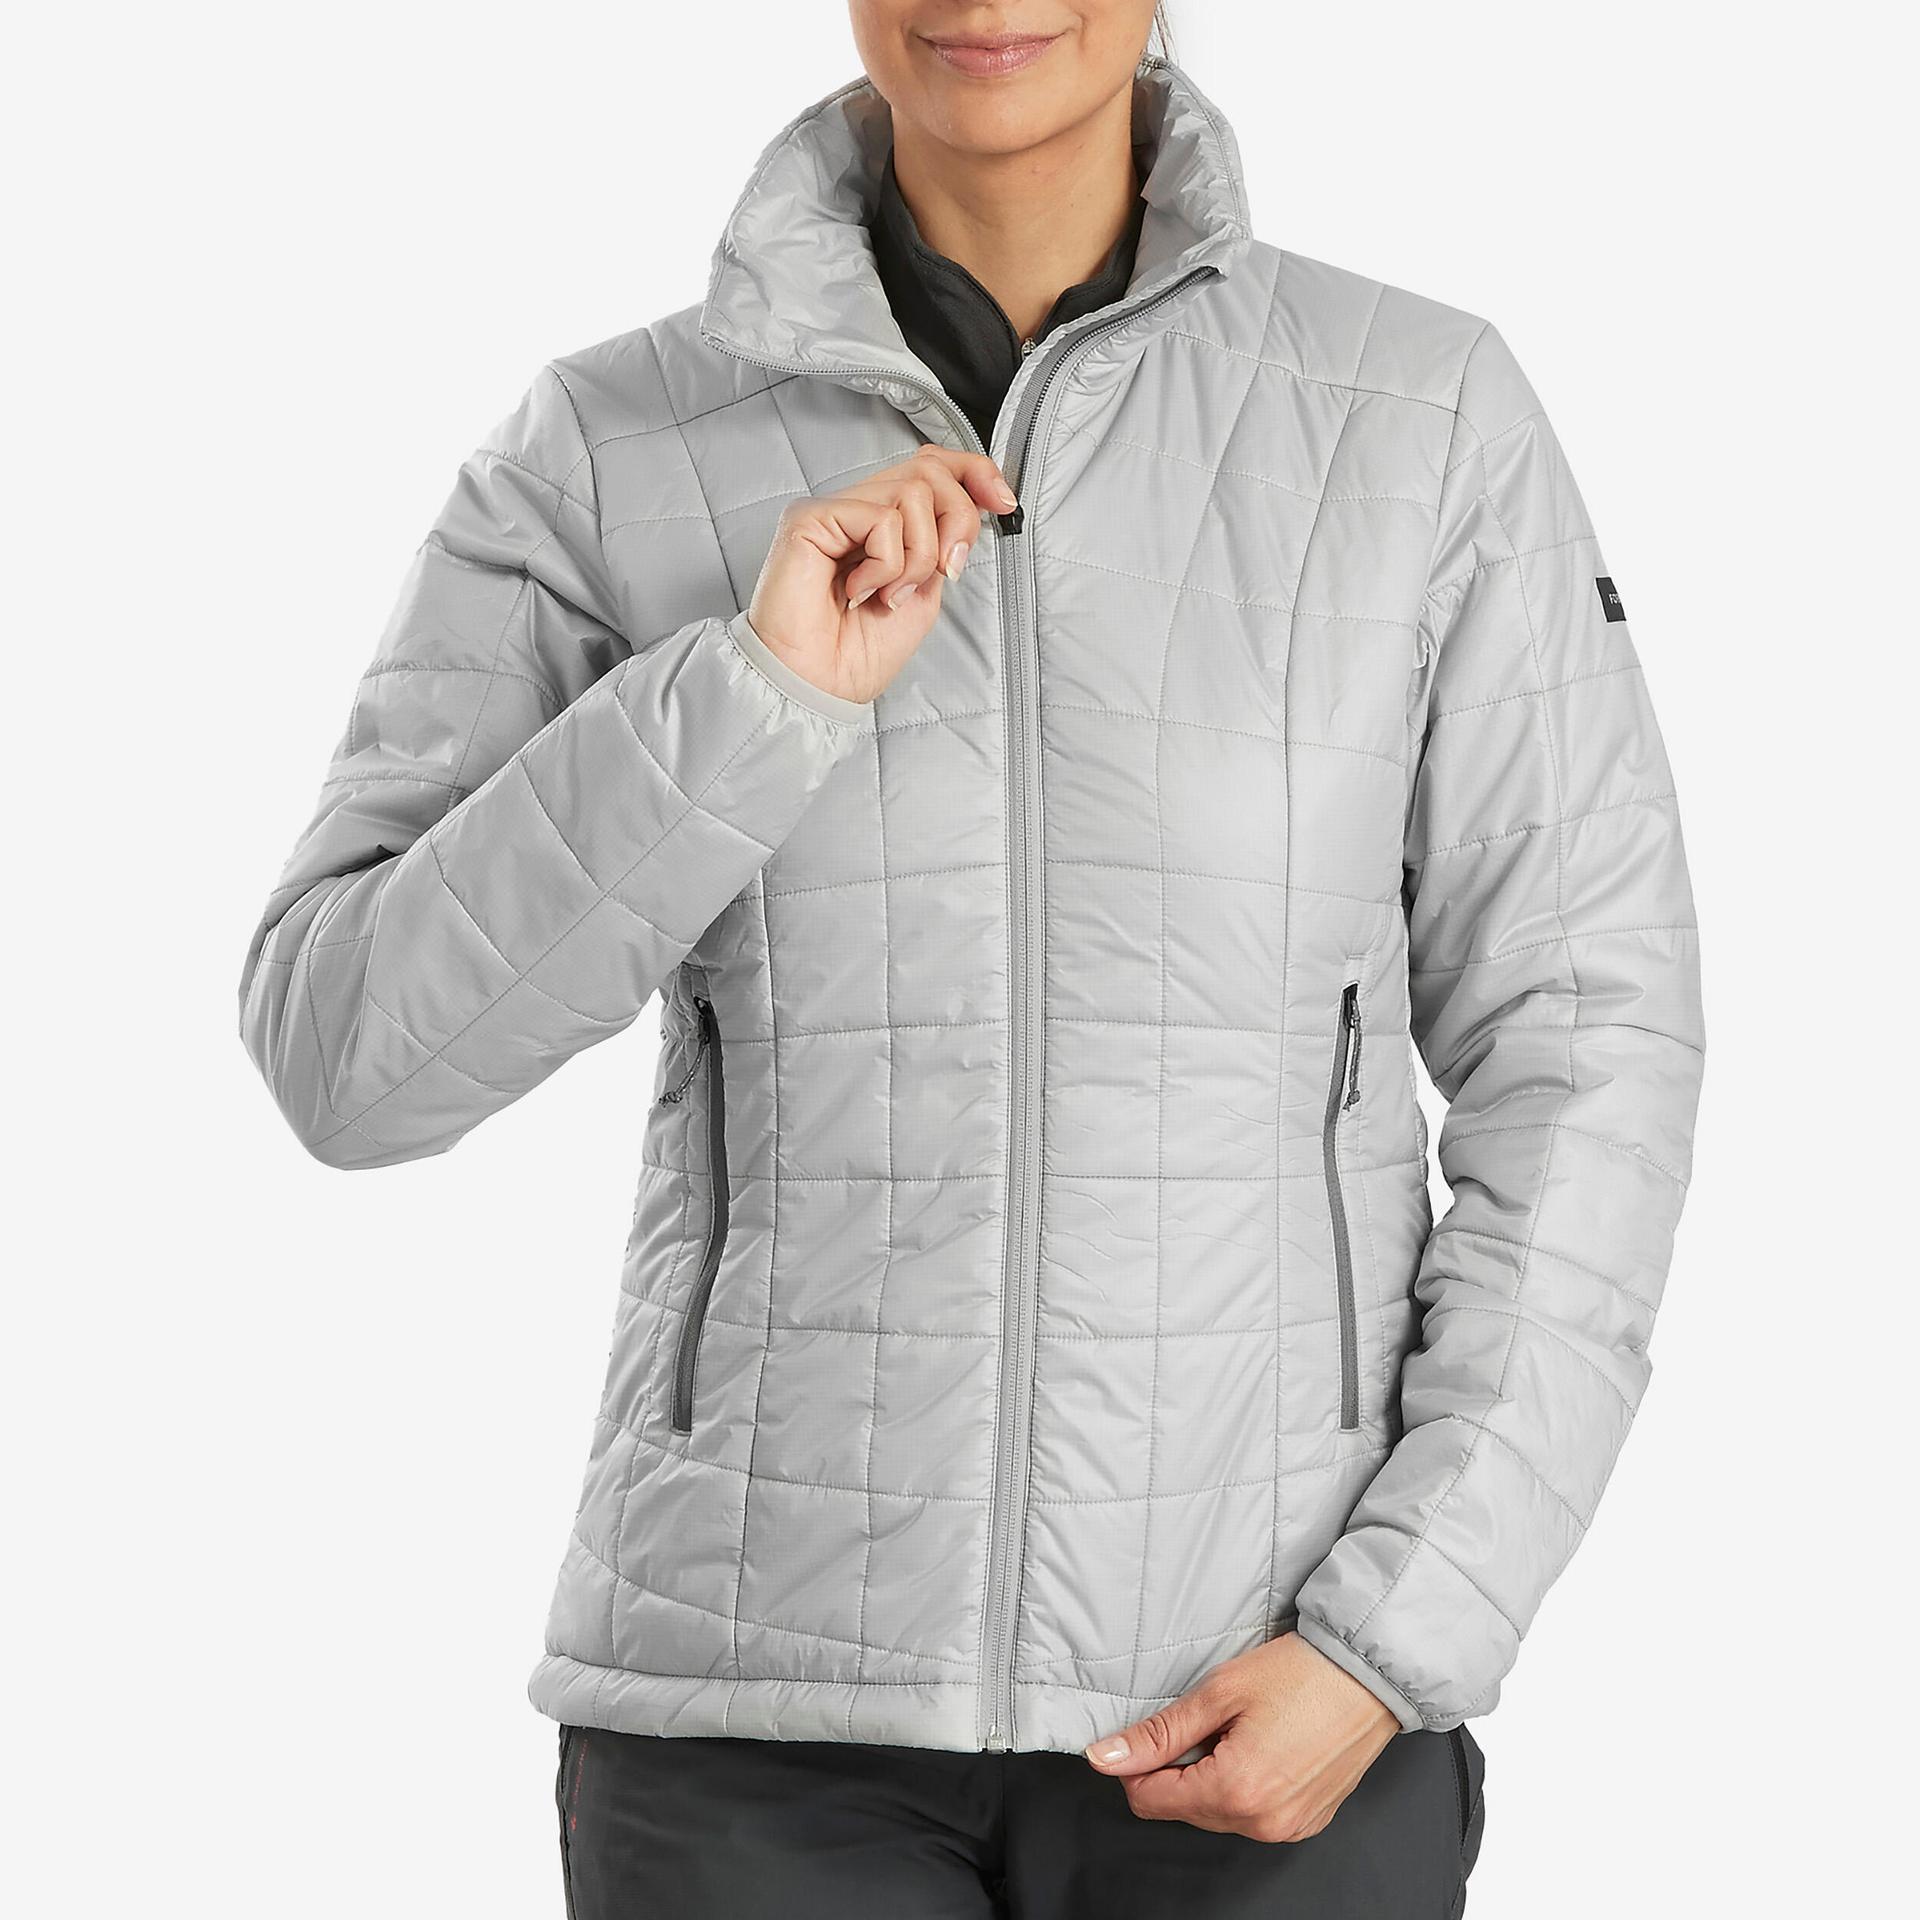 women's trekking padded jacket - mt 100 -5°c - grey